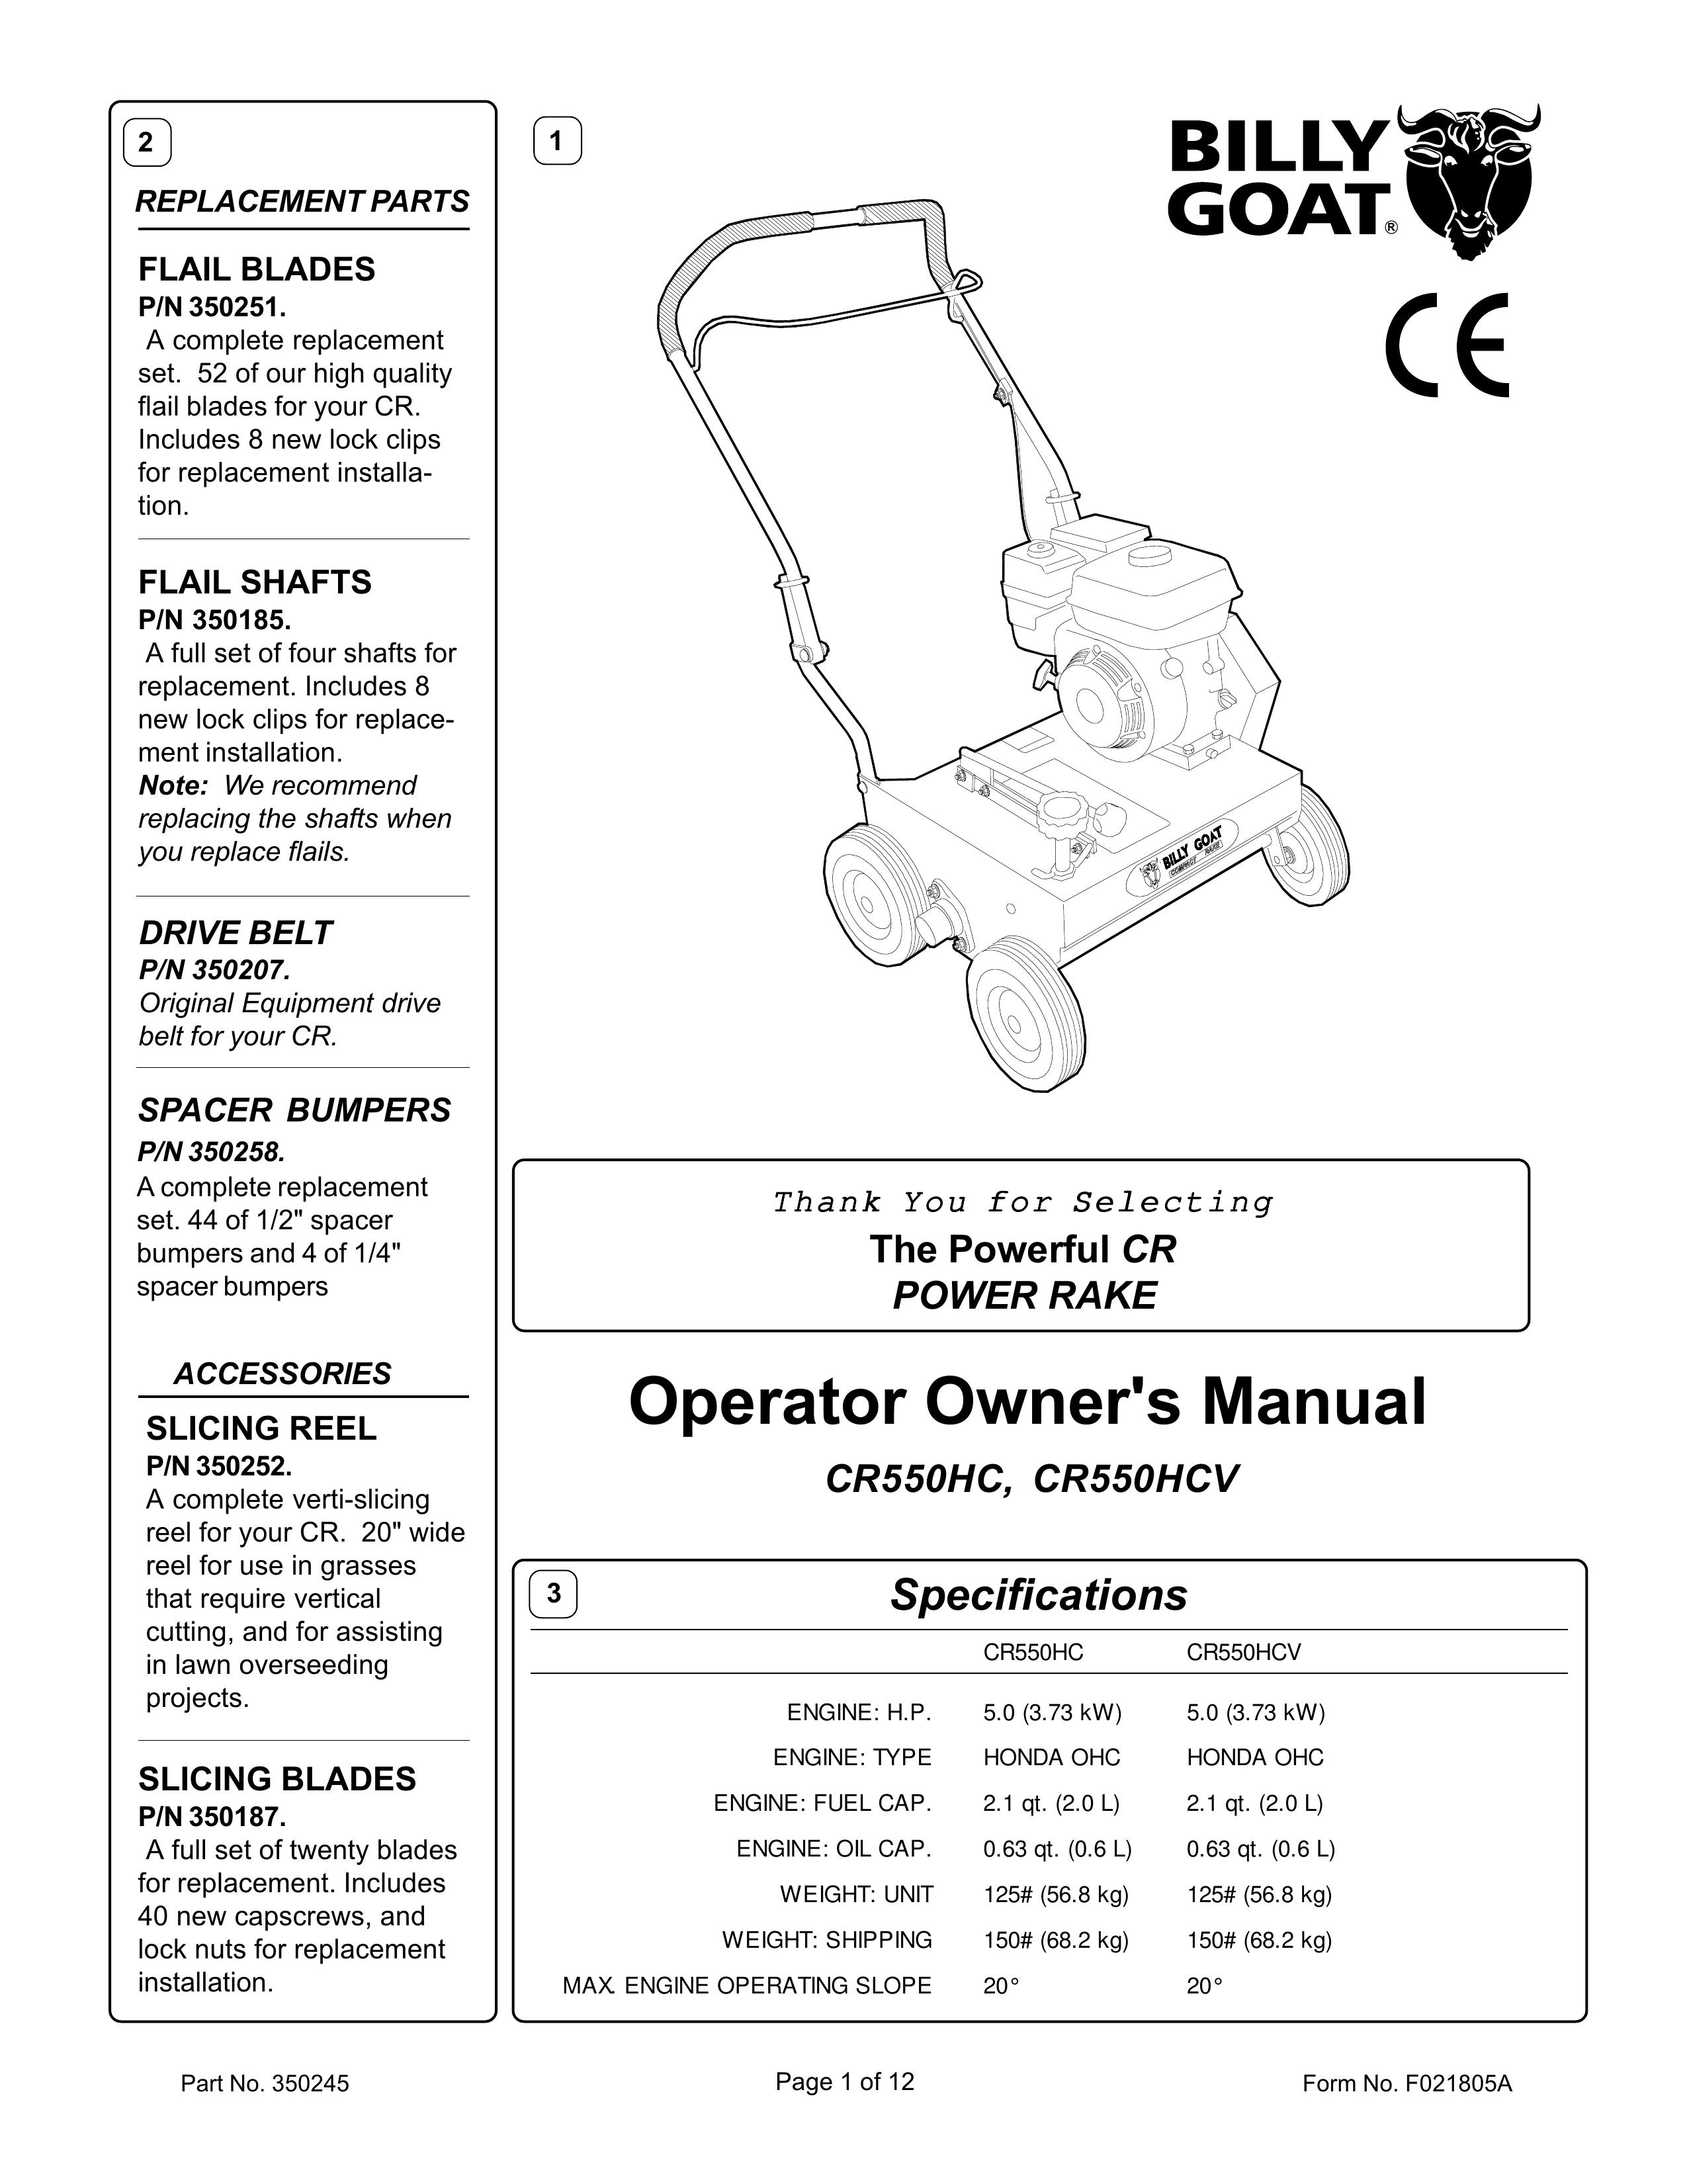 Billy Goat CR550HCV Lawn Mower User Manual